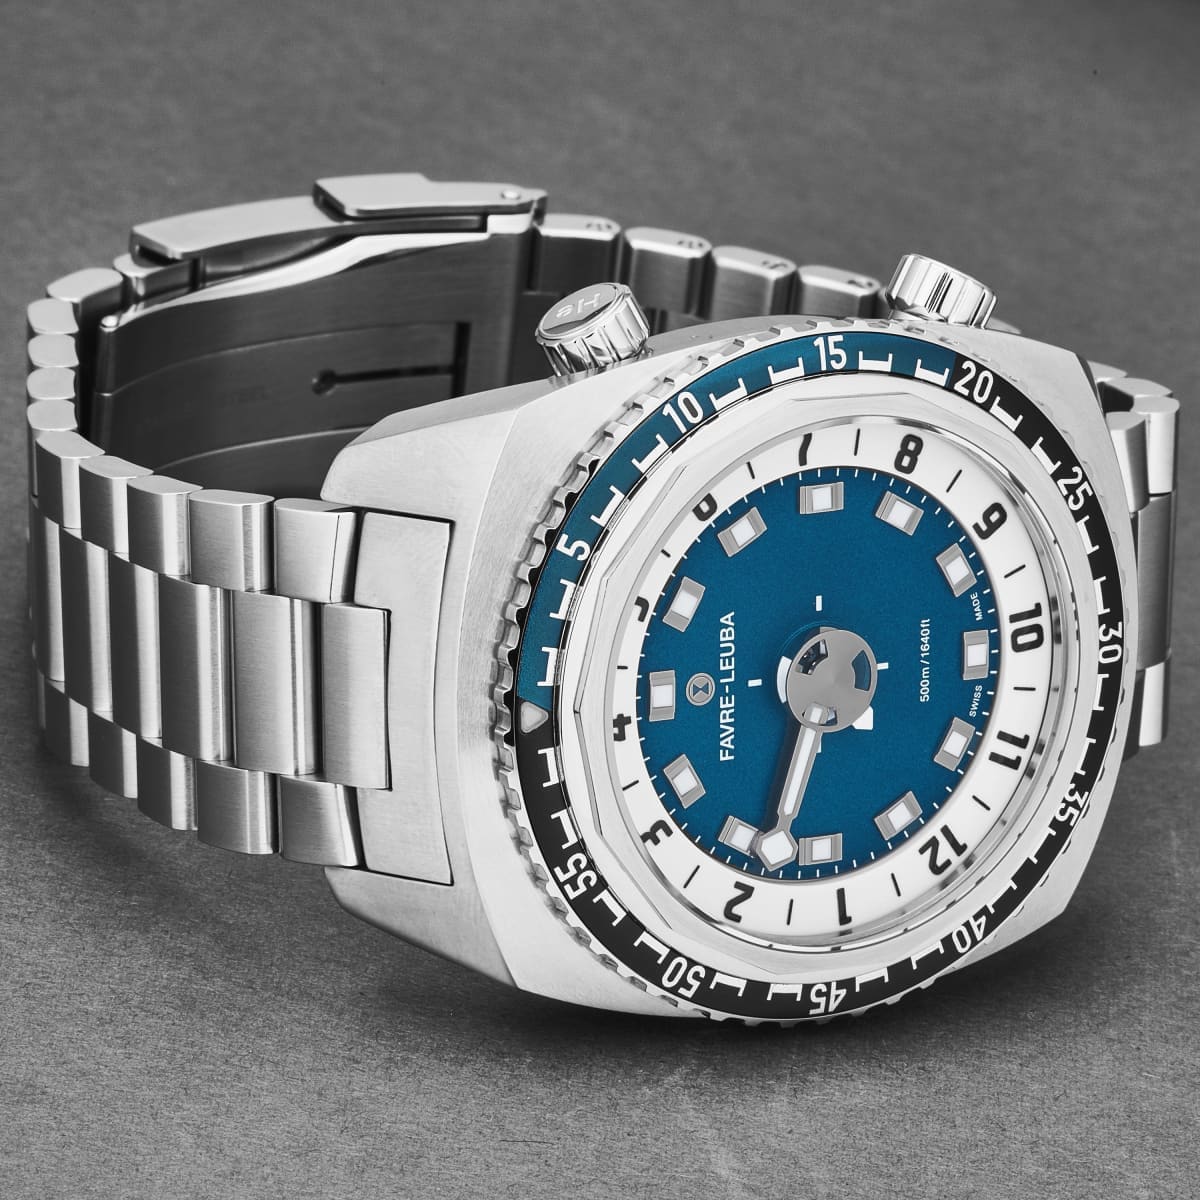 Favre-Leuba Men’s 00.10101.08.52.20 ’Raider Harpoon’ Blue White Dial Stainless Steel Bracelet Automatic Watch - On sale